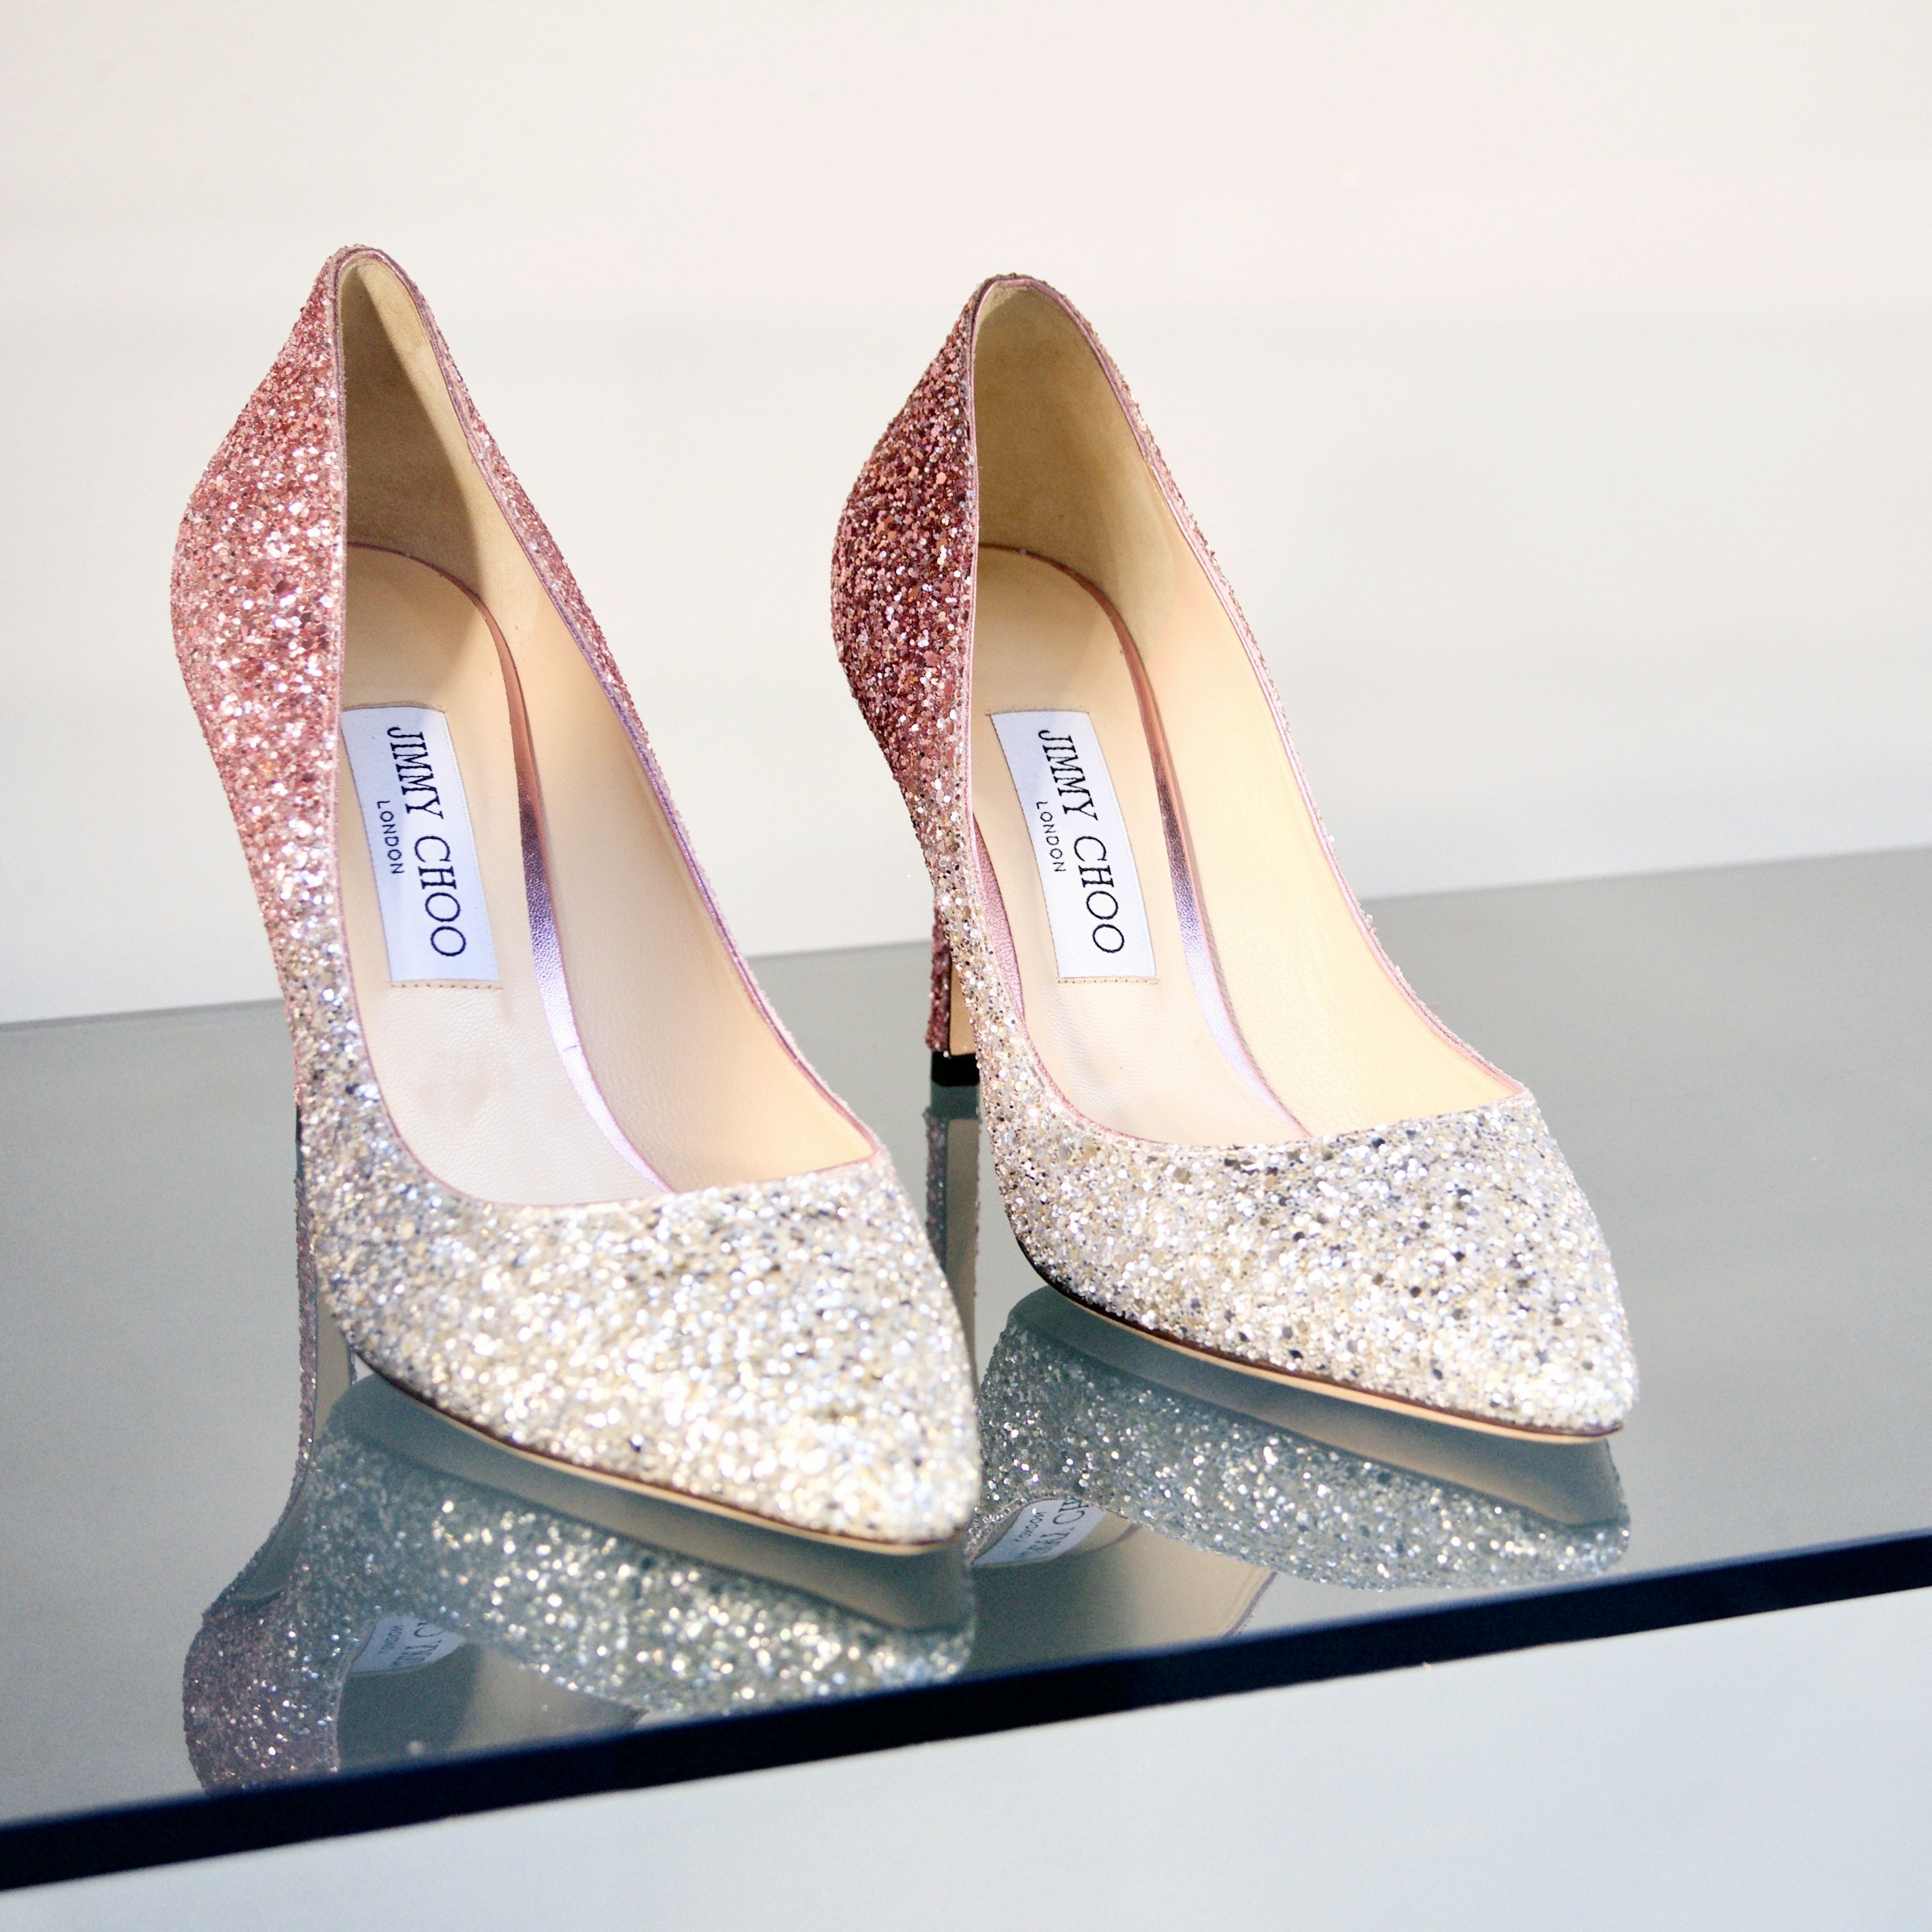 Pair of glittery Jimmy Choo heels | Source: Unsplash